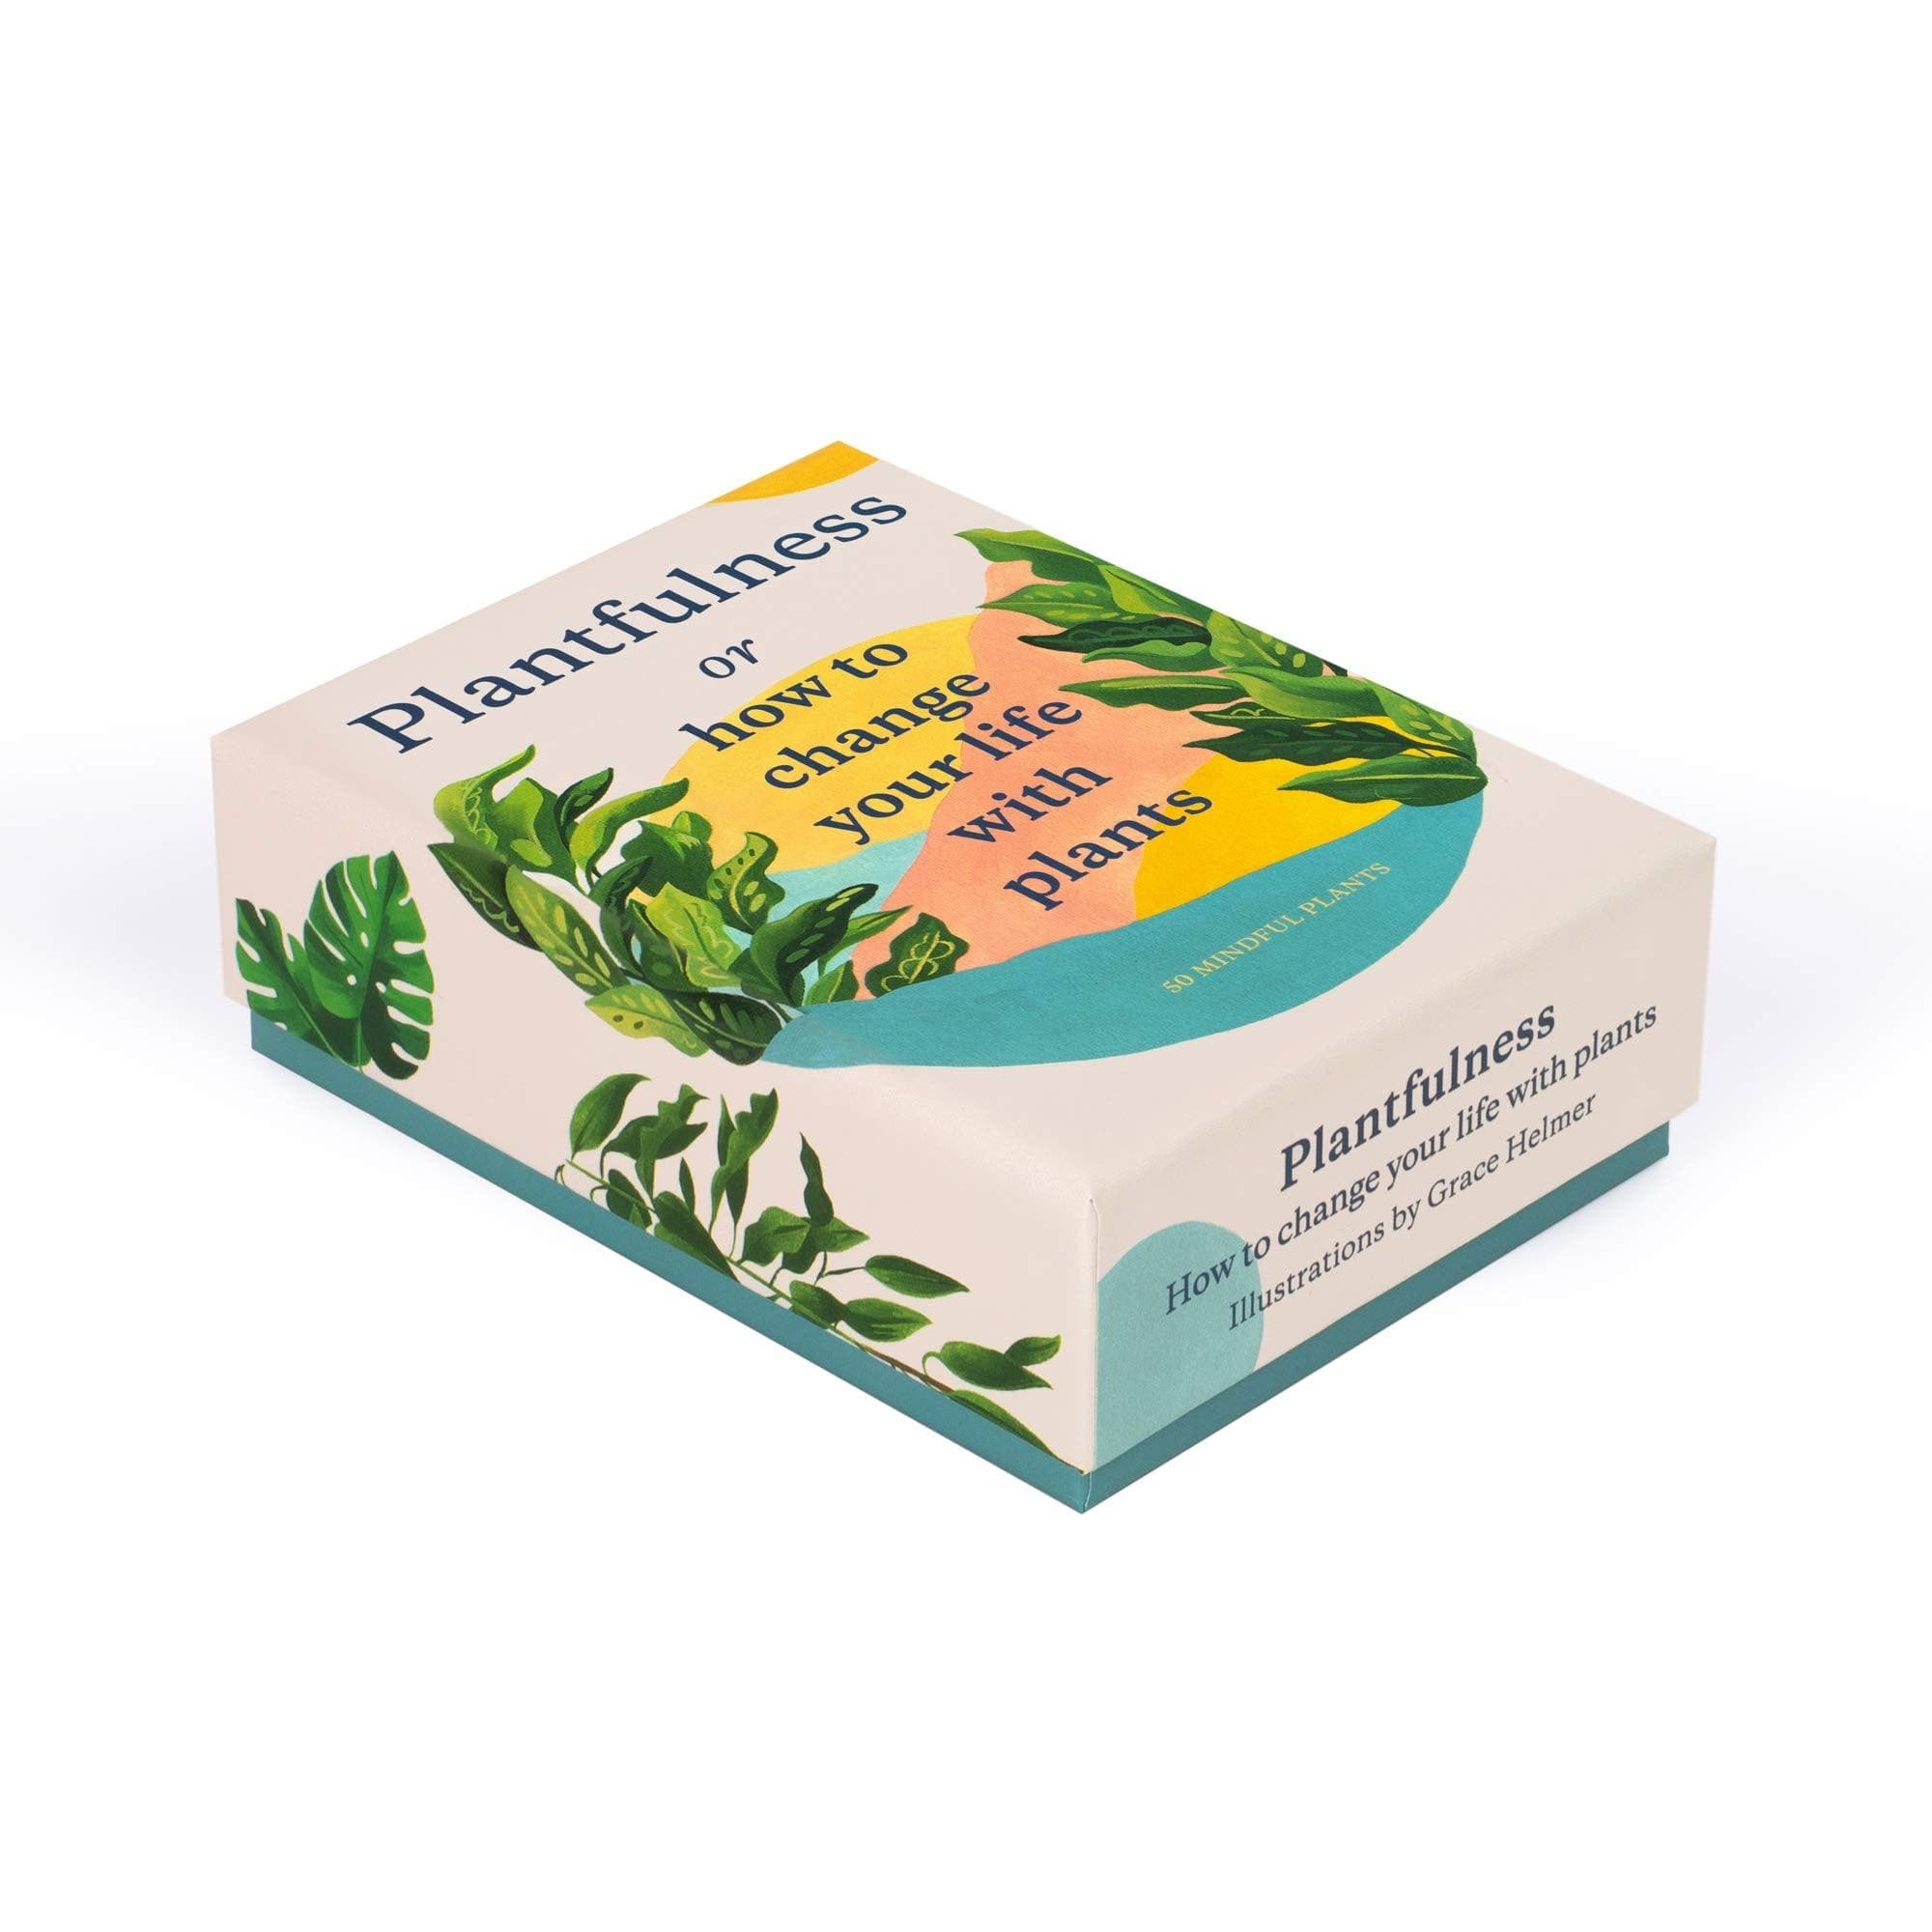 Plantfulness Card Deck - Green Fresh Florals + Plants